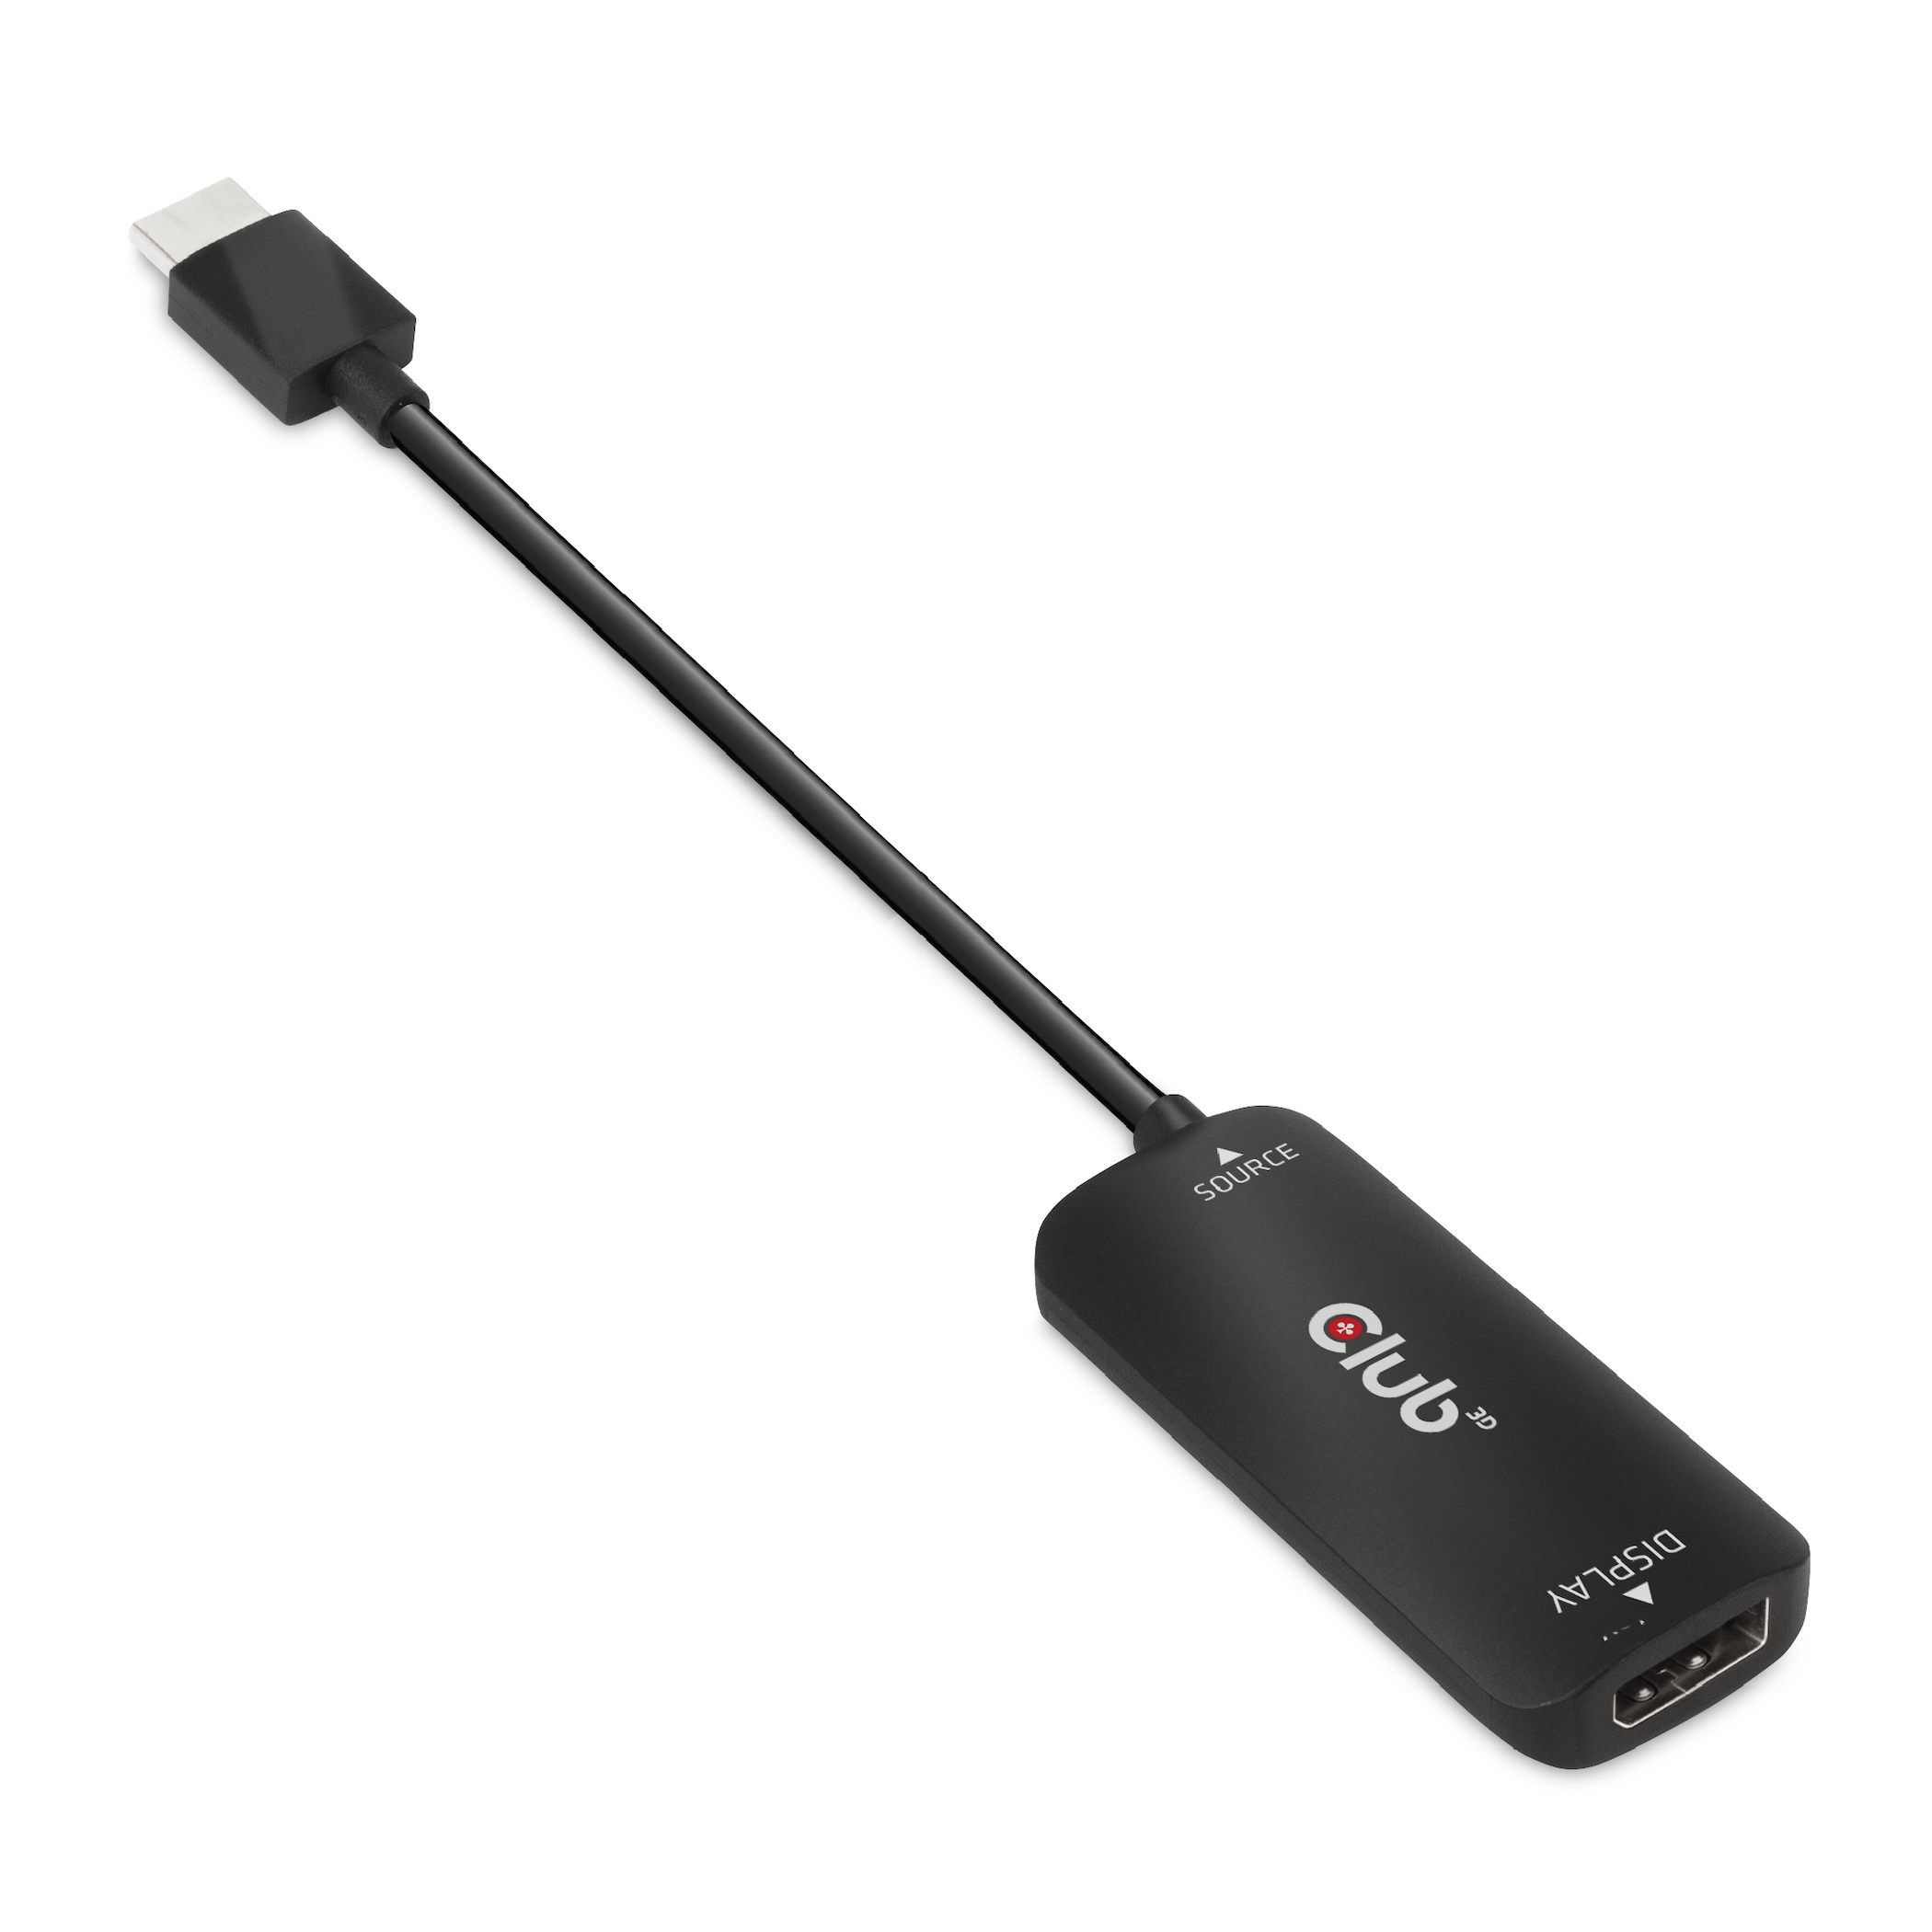 HDMI+ Micro USB to DisplayPort 4K120Hz or 8K30Hz M/F Active Adapter